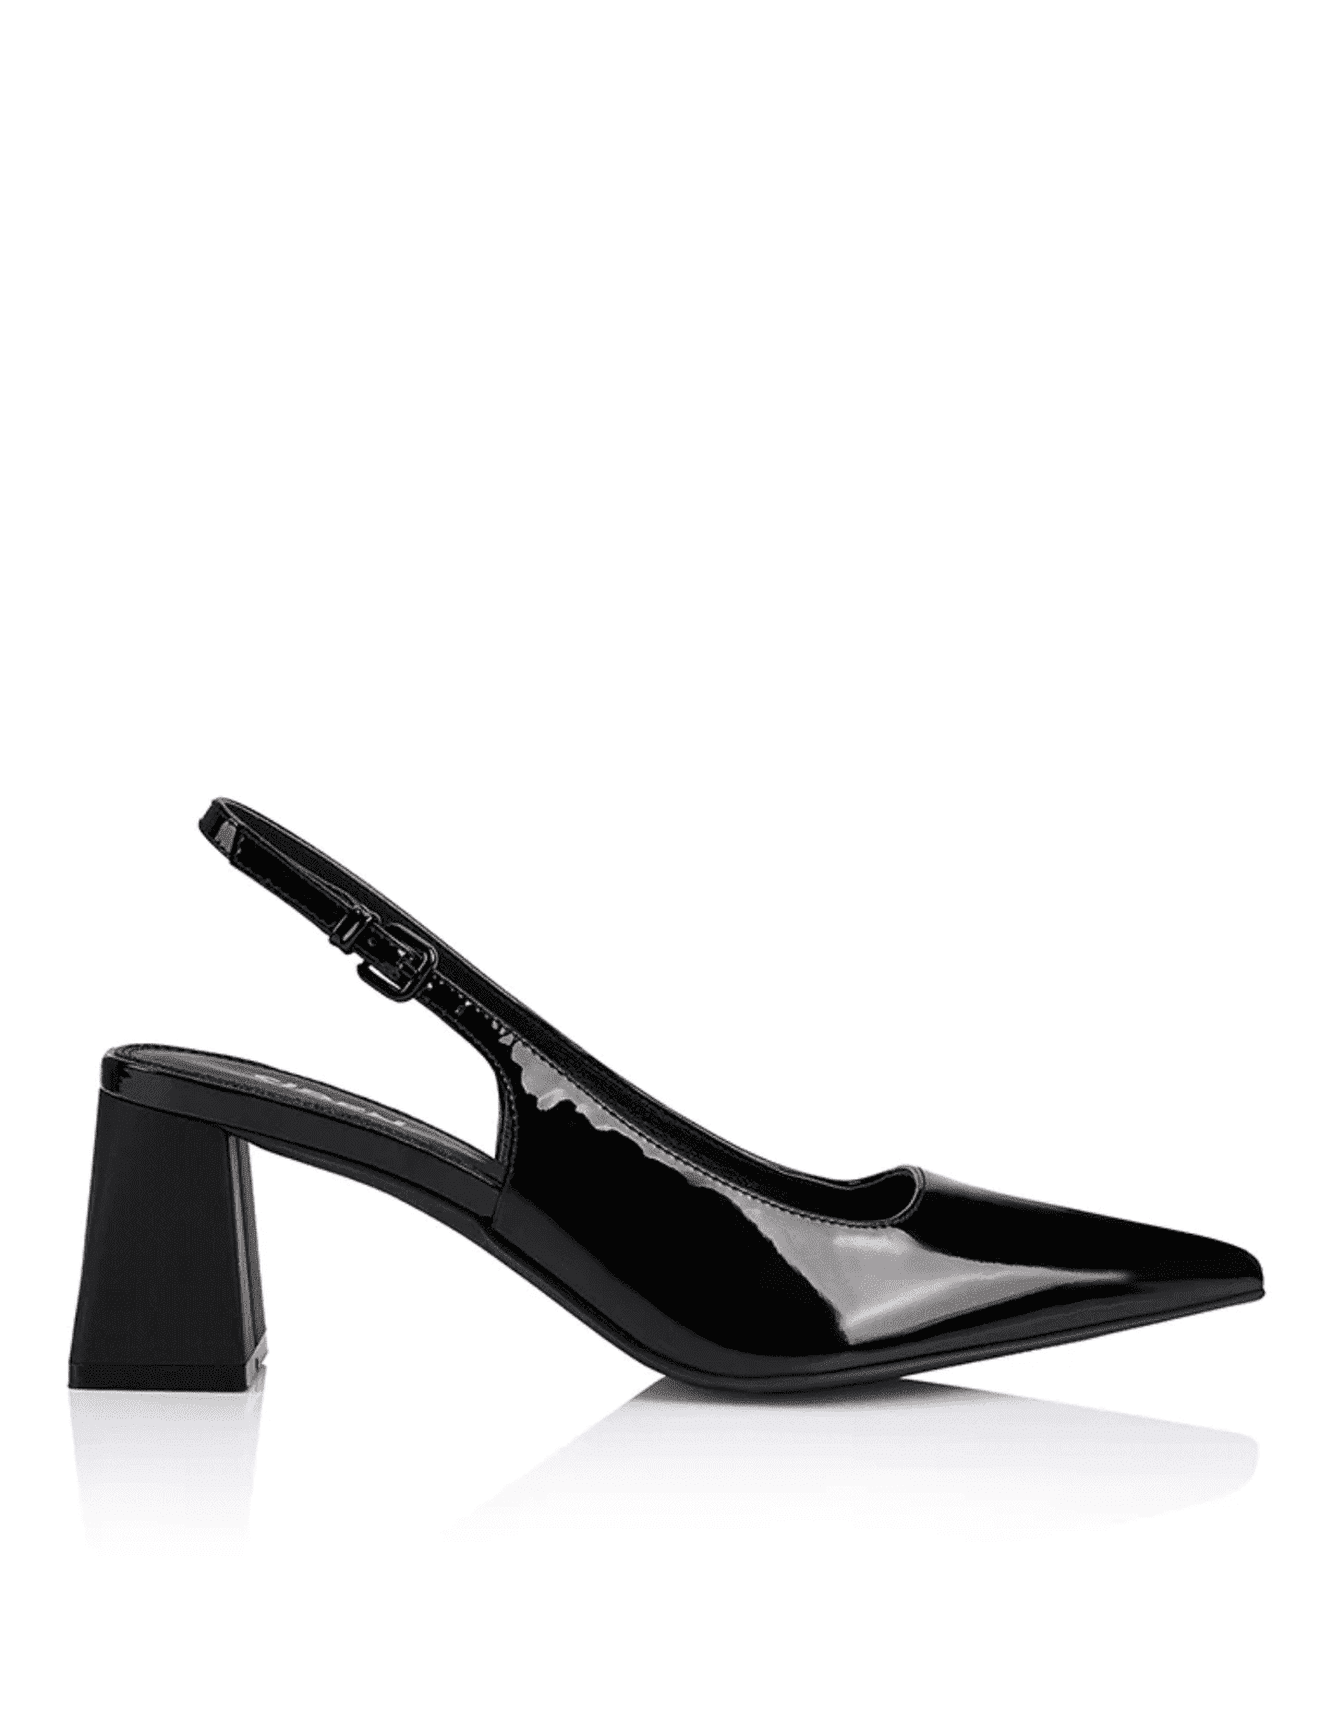 Yarra Pointed Toe Slingbacks - Black Patent Leather